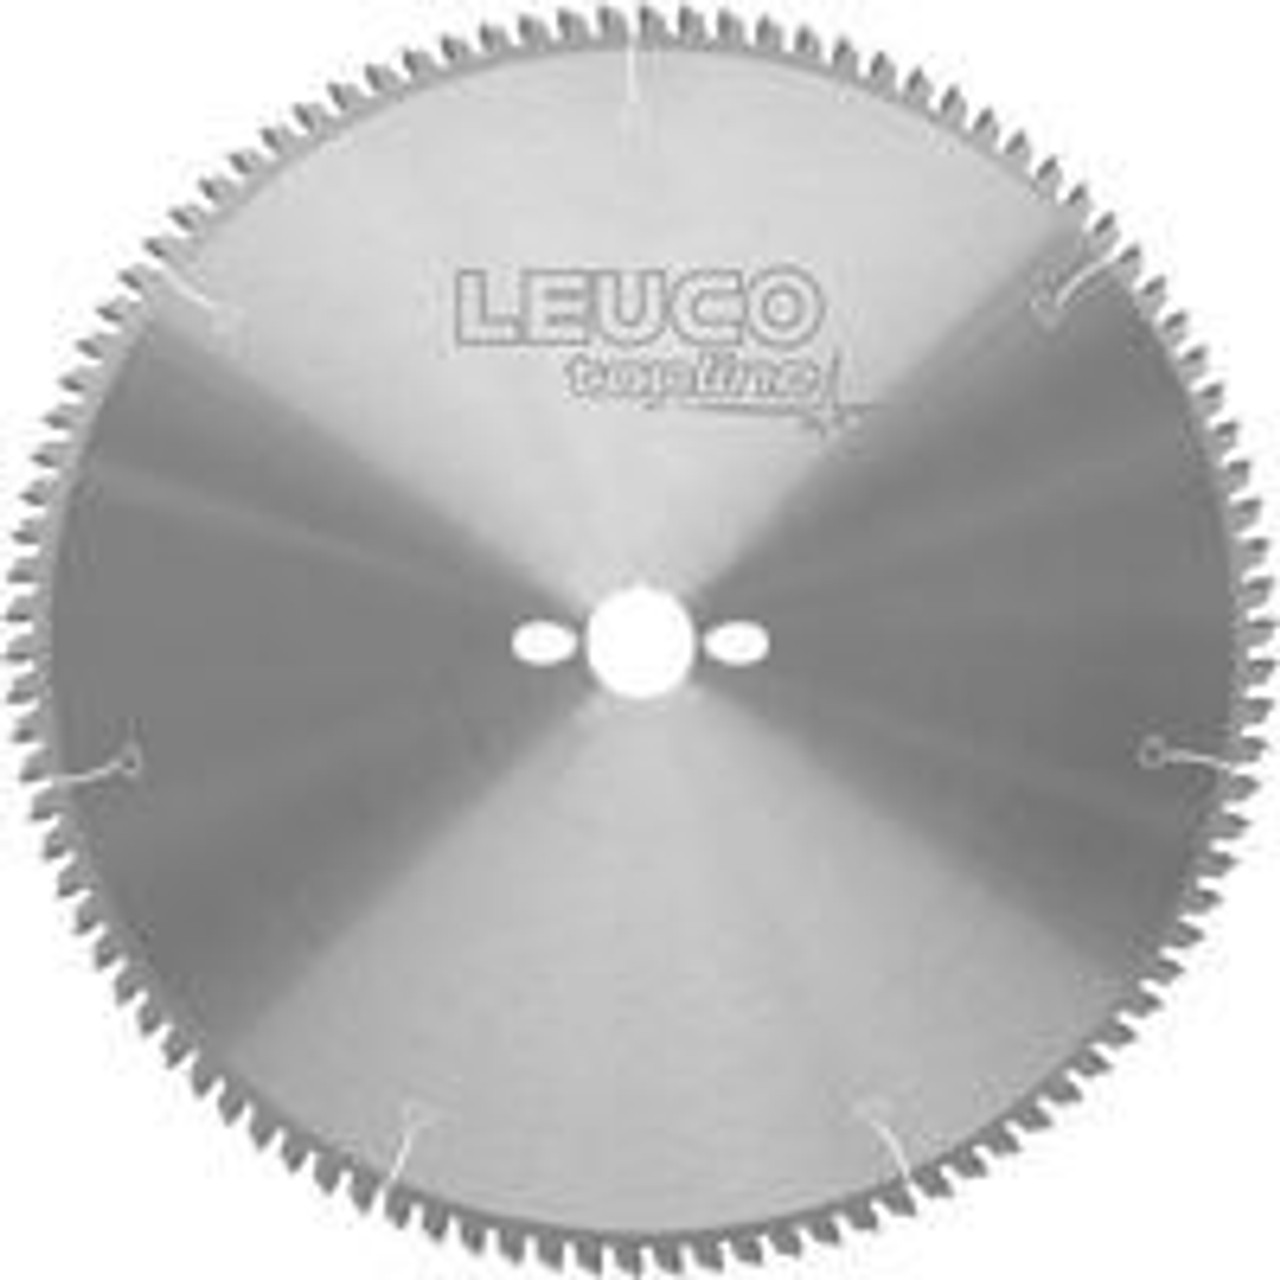 LEUCO Saw Blades | NF Chop Negative G7 350 x 30 Saw Blades for Aluminium